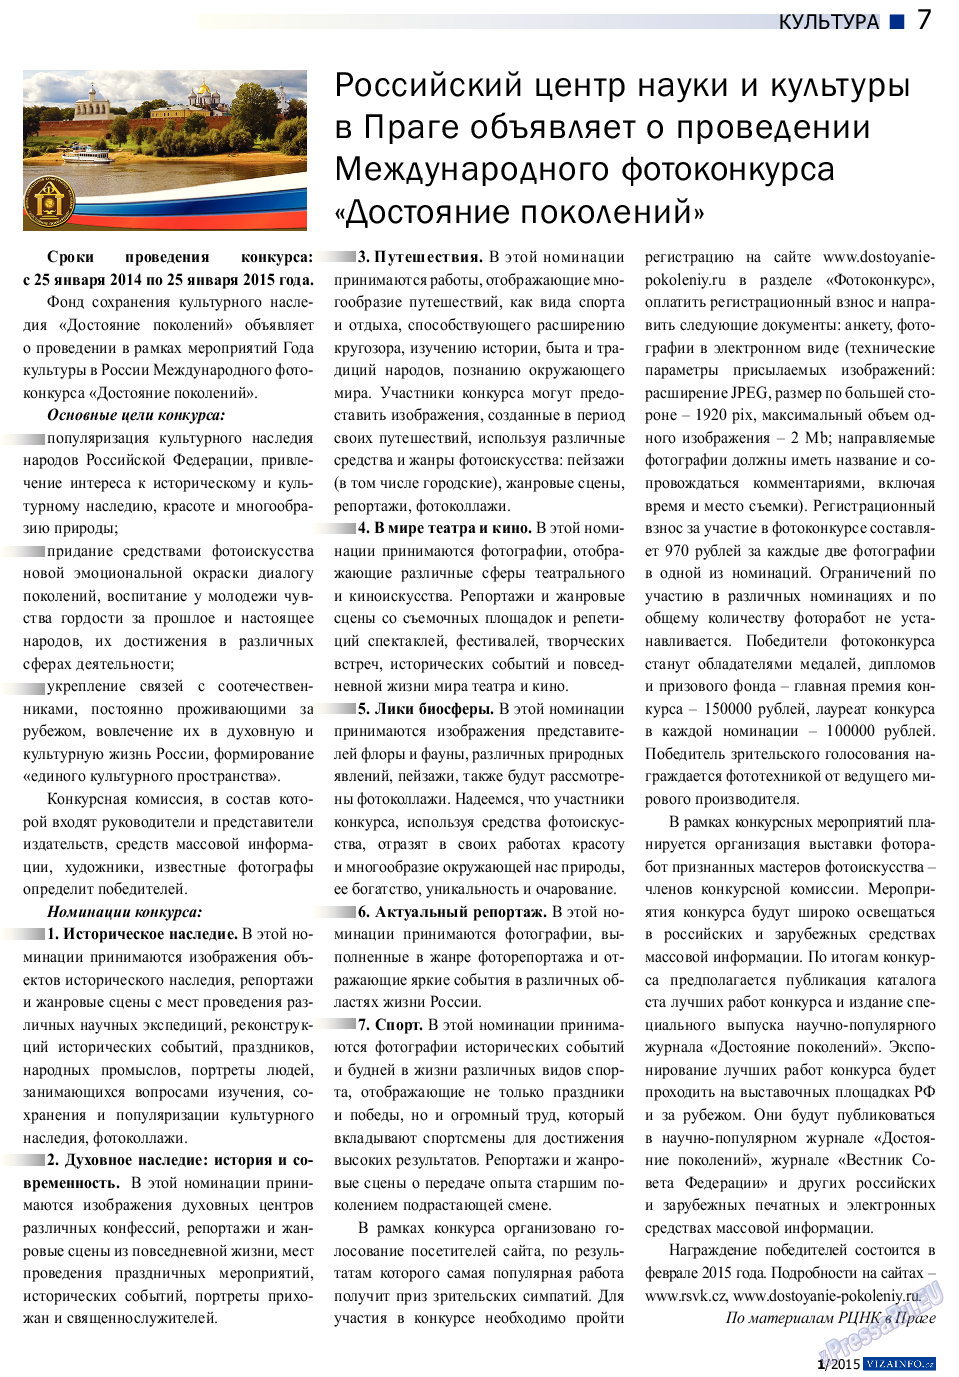 Vizainfo.cz, газета. 2014 №64 стр.7